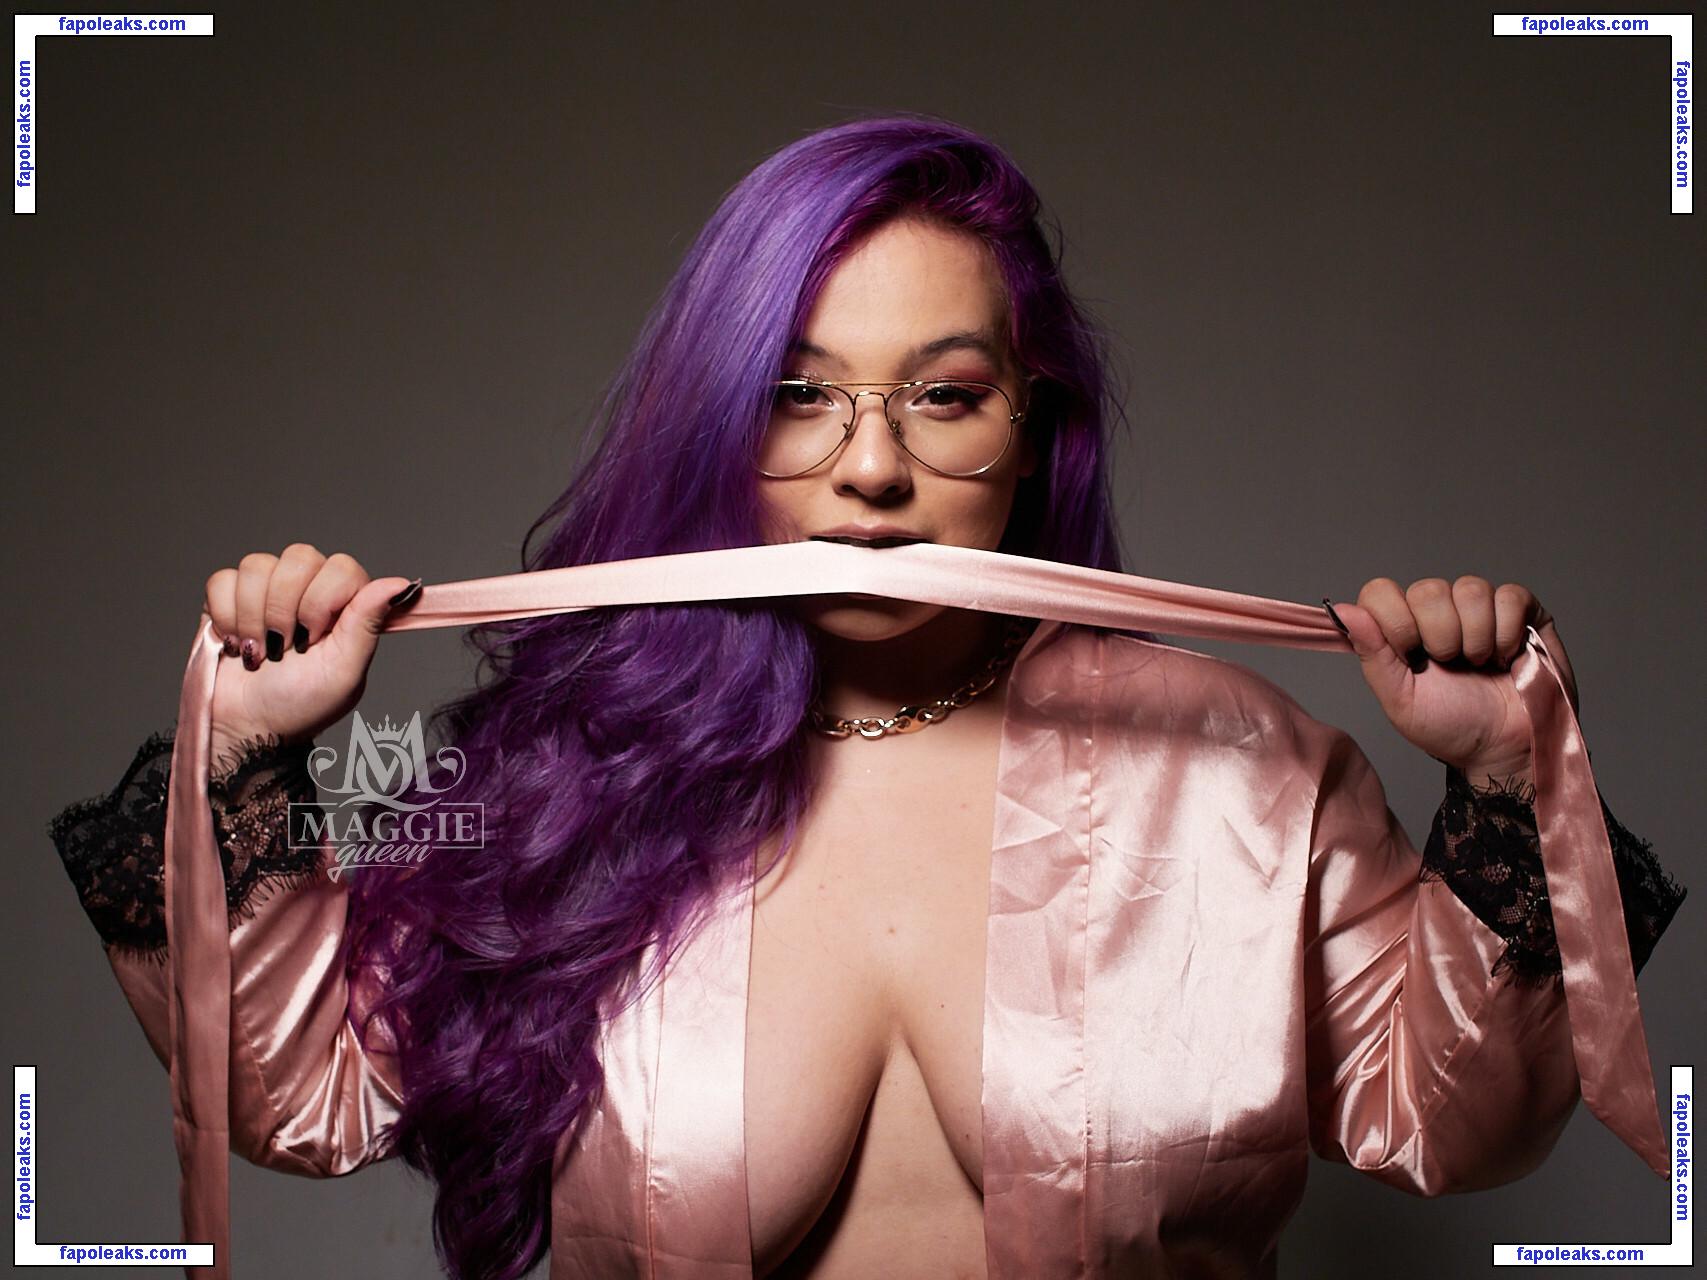 maggiequeen / maggiequeenx / purplemaggie_queen nude photo #0022 from OnlyFans